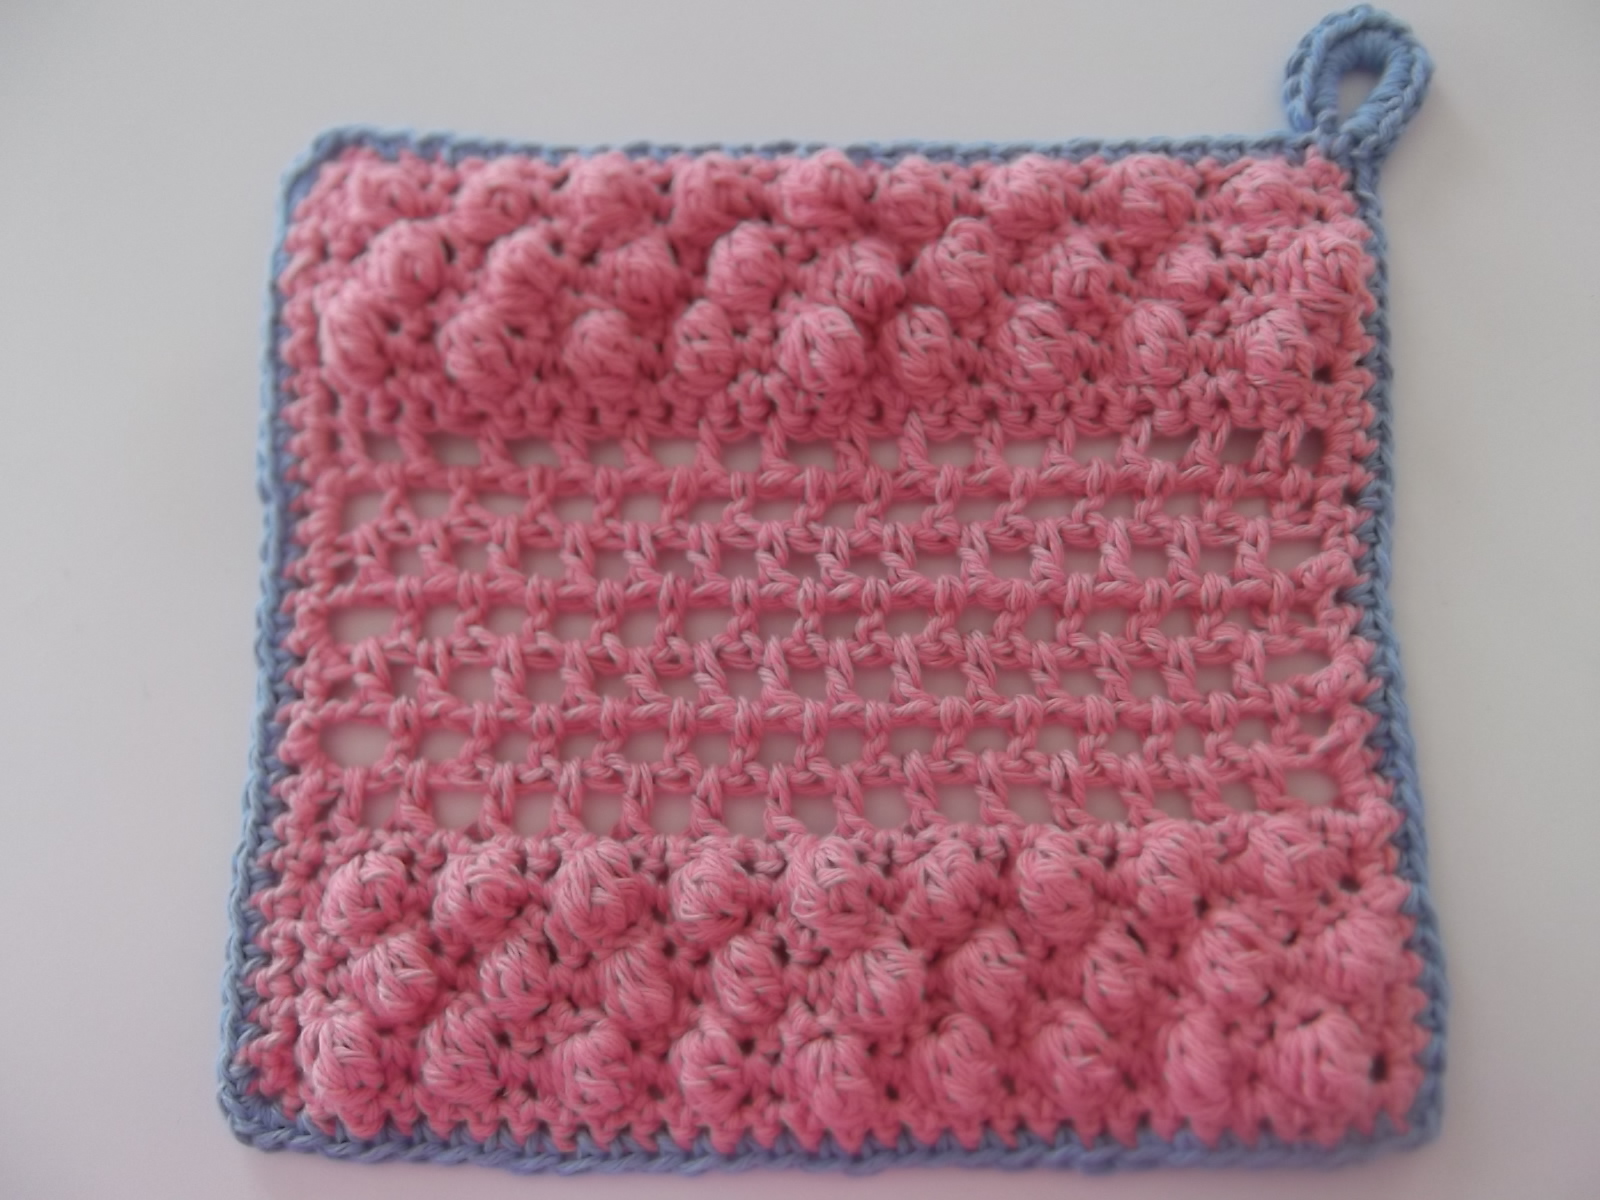 Crochet - Wikipedia, the free encyclopedia